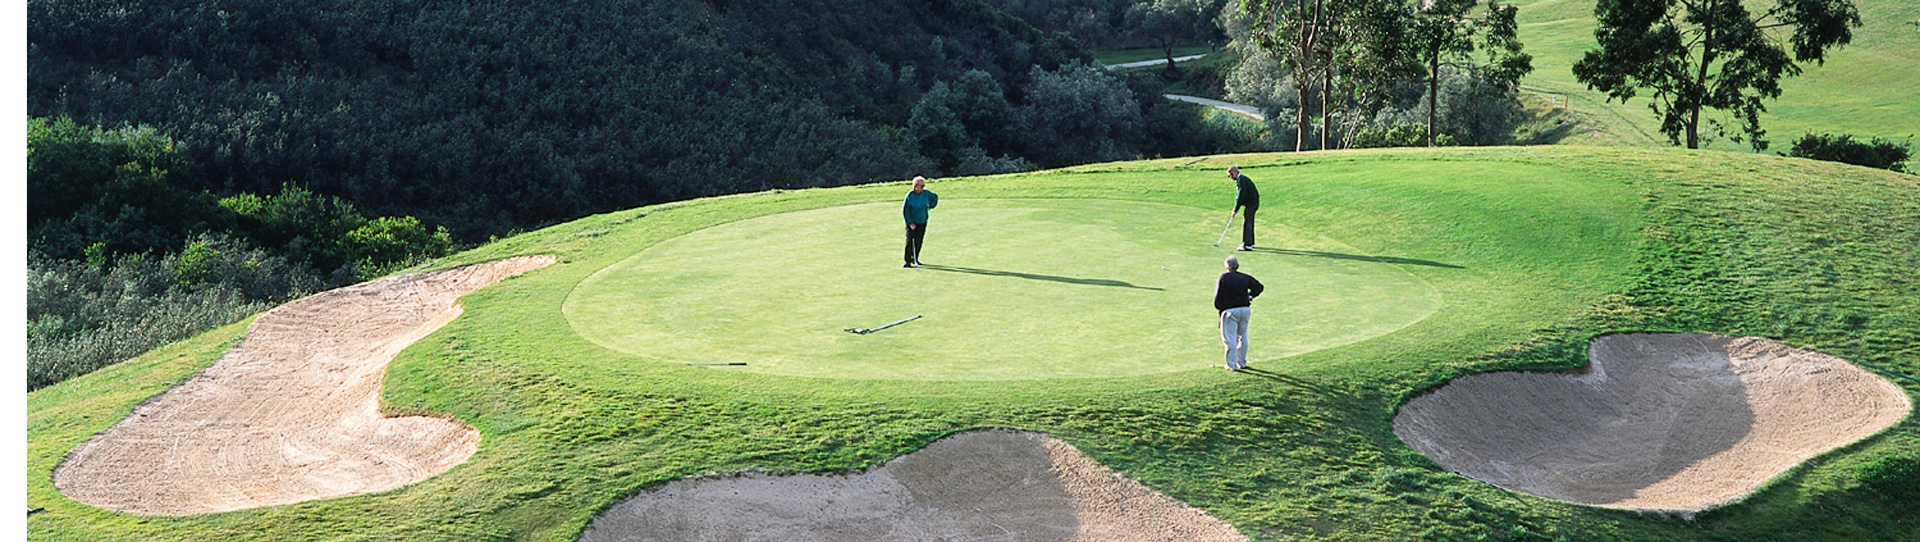 Portugal golf courses - Santo Antonio Golf  - Photo 3